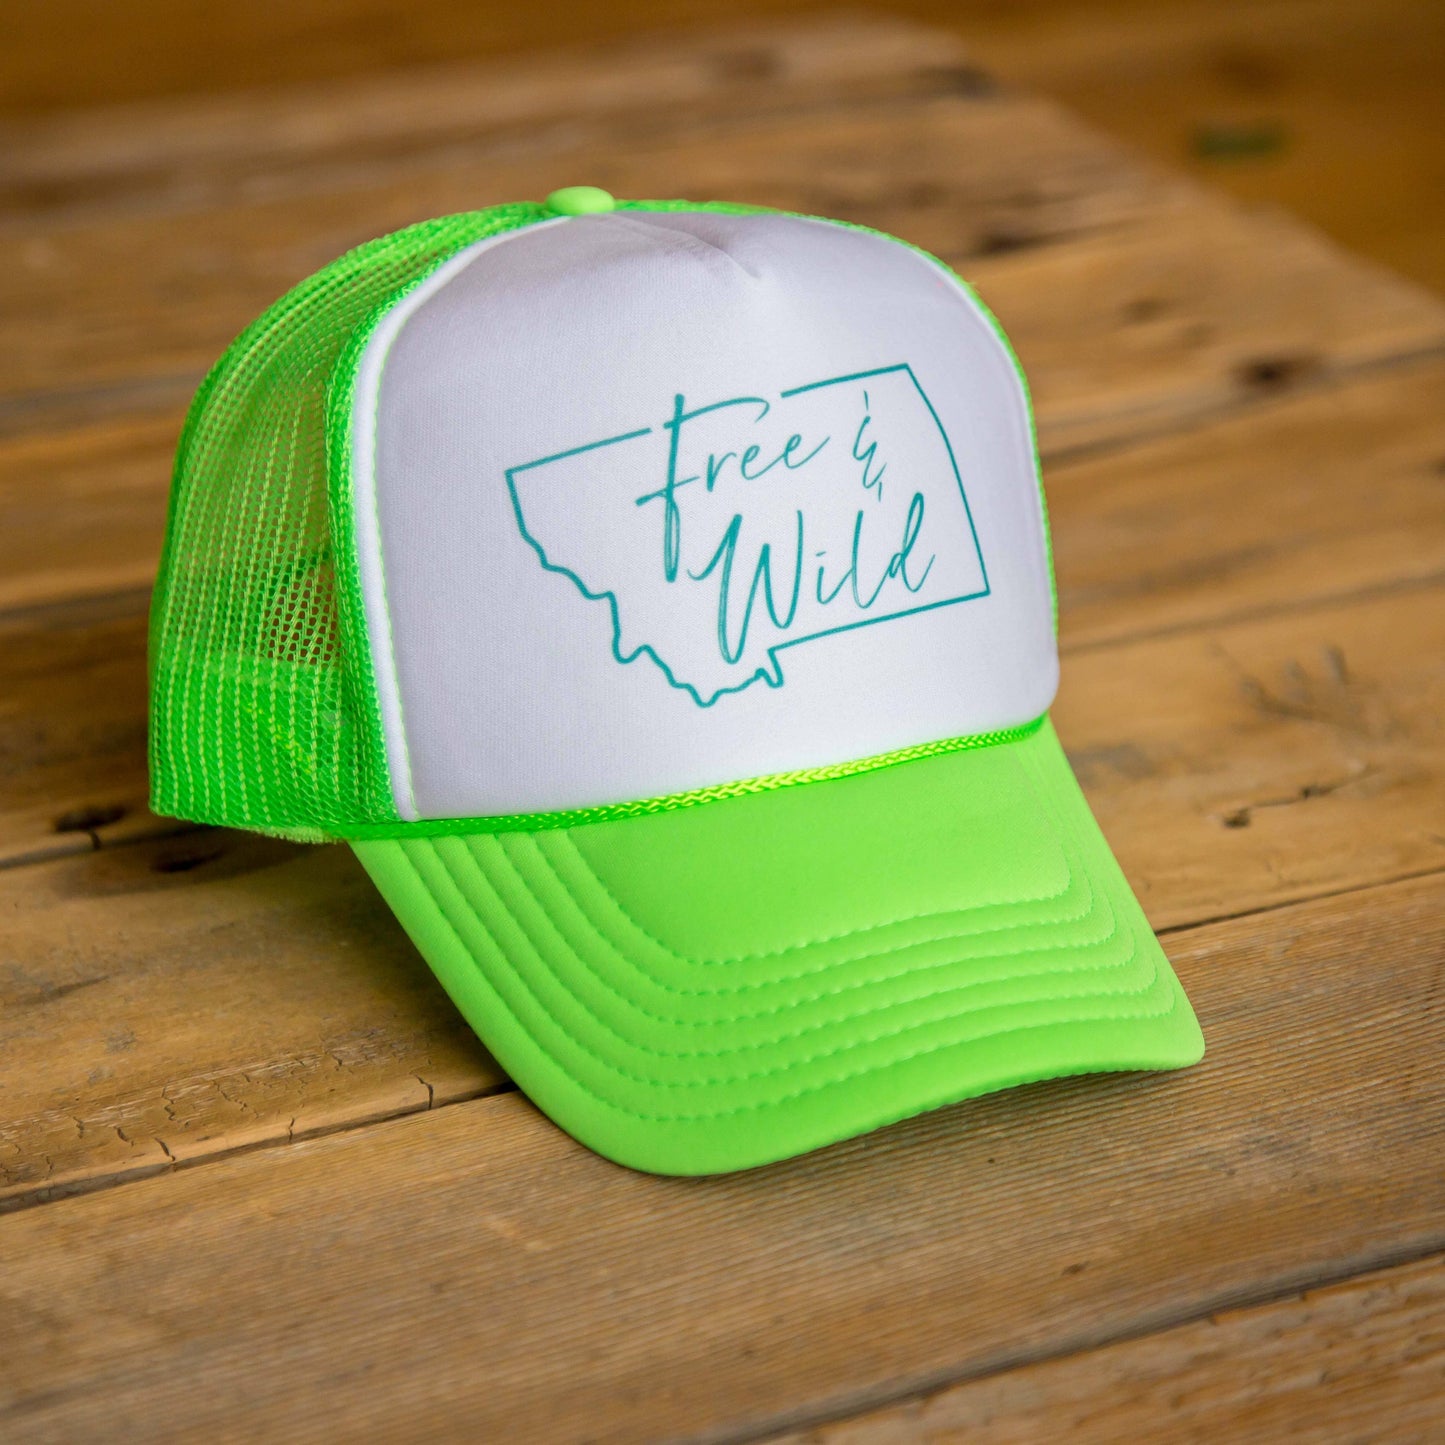 Montana Free & Wild Adult Trucker Hat